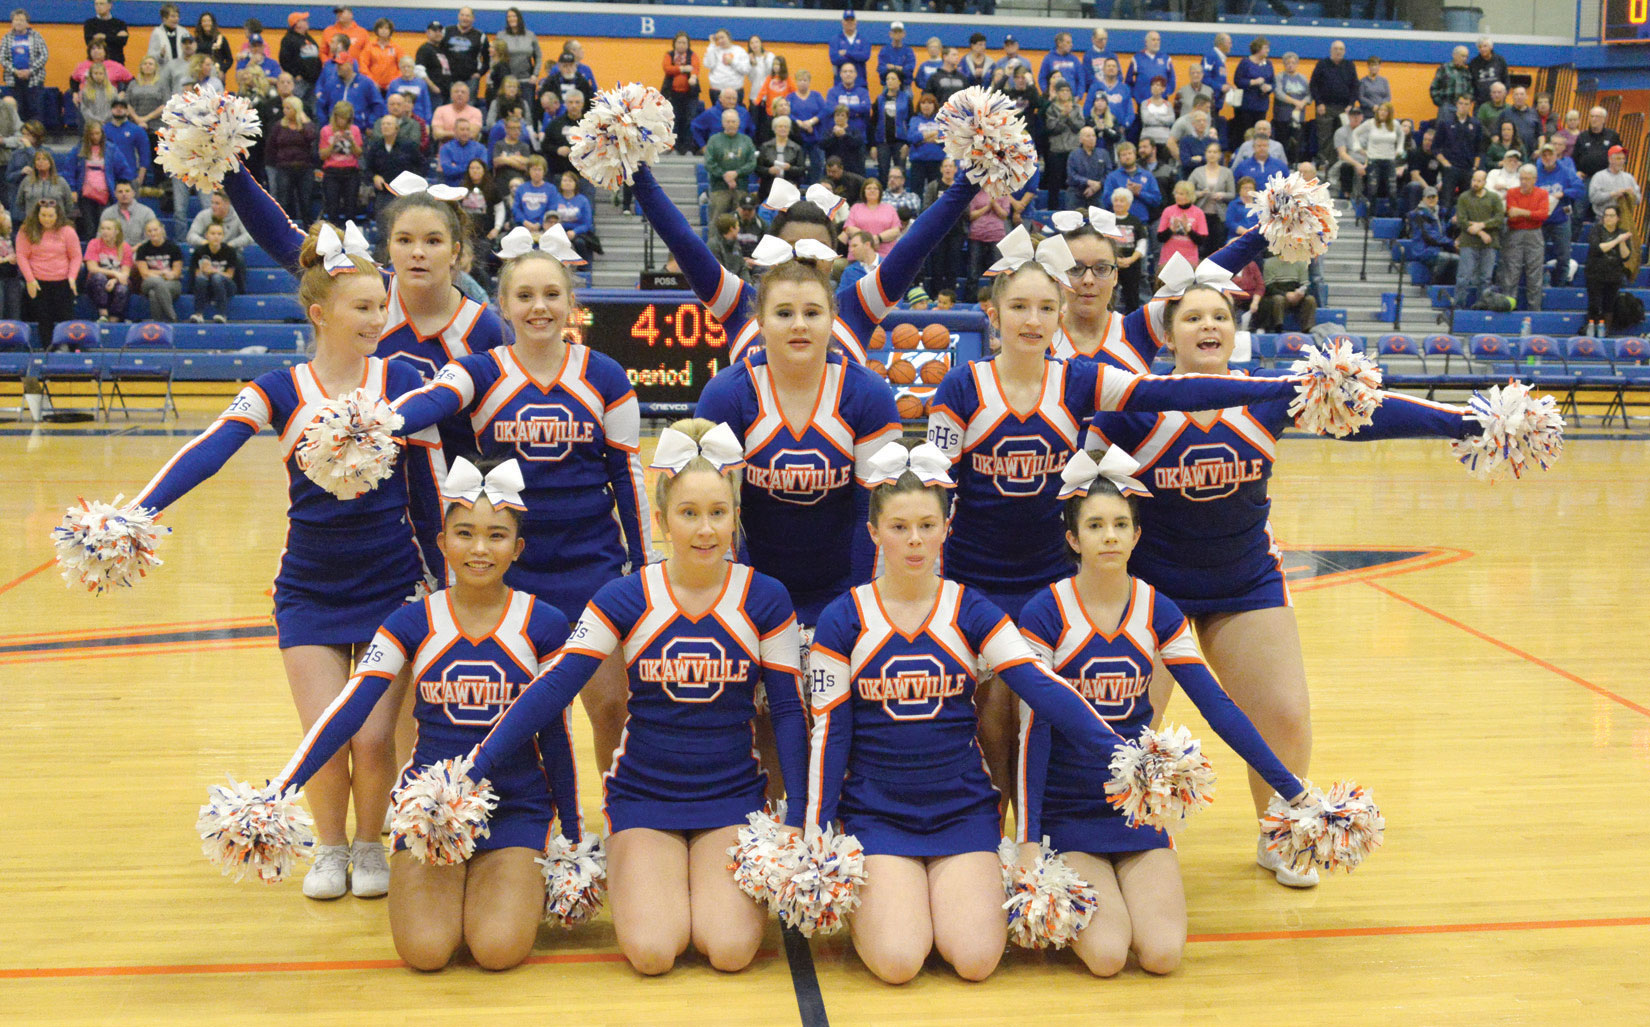 Okawville High School Cheerleaders